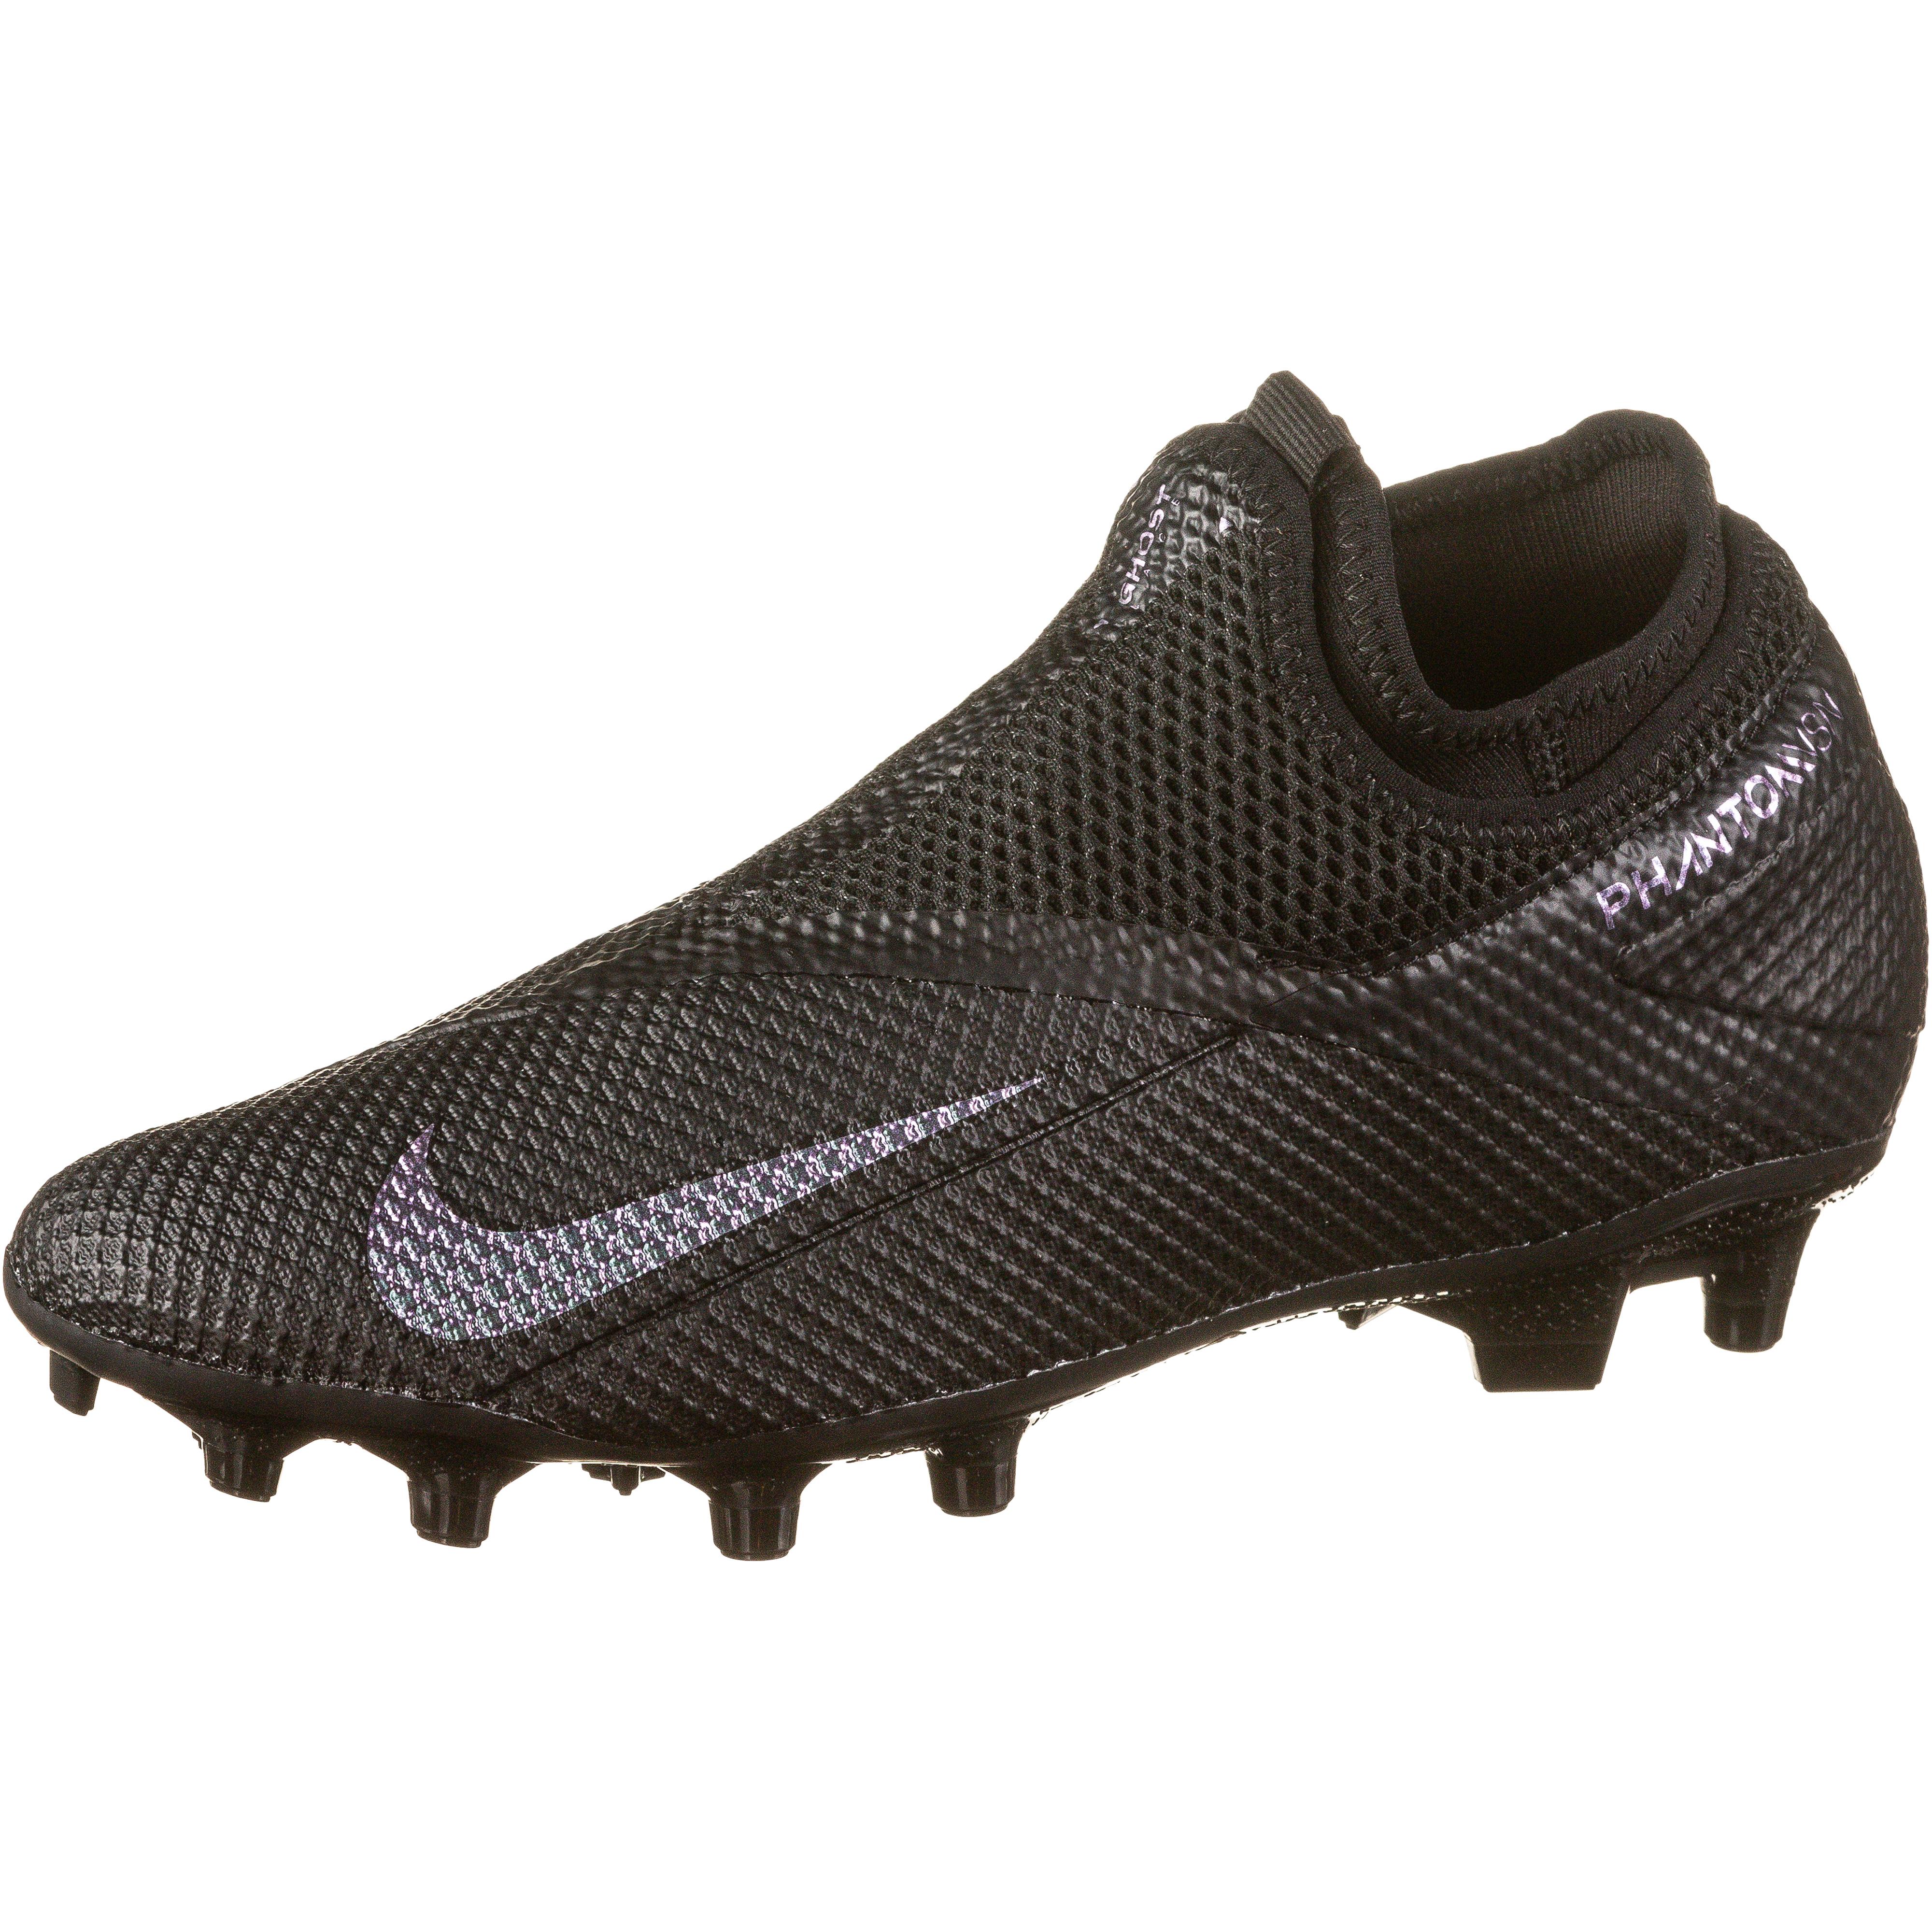 Buty piłkarskie Nike React Phantom VSN 2 Pro DF IC CD4170 .